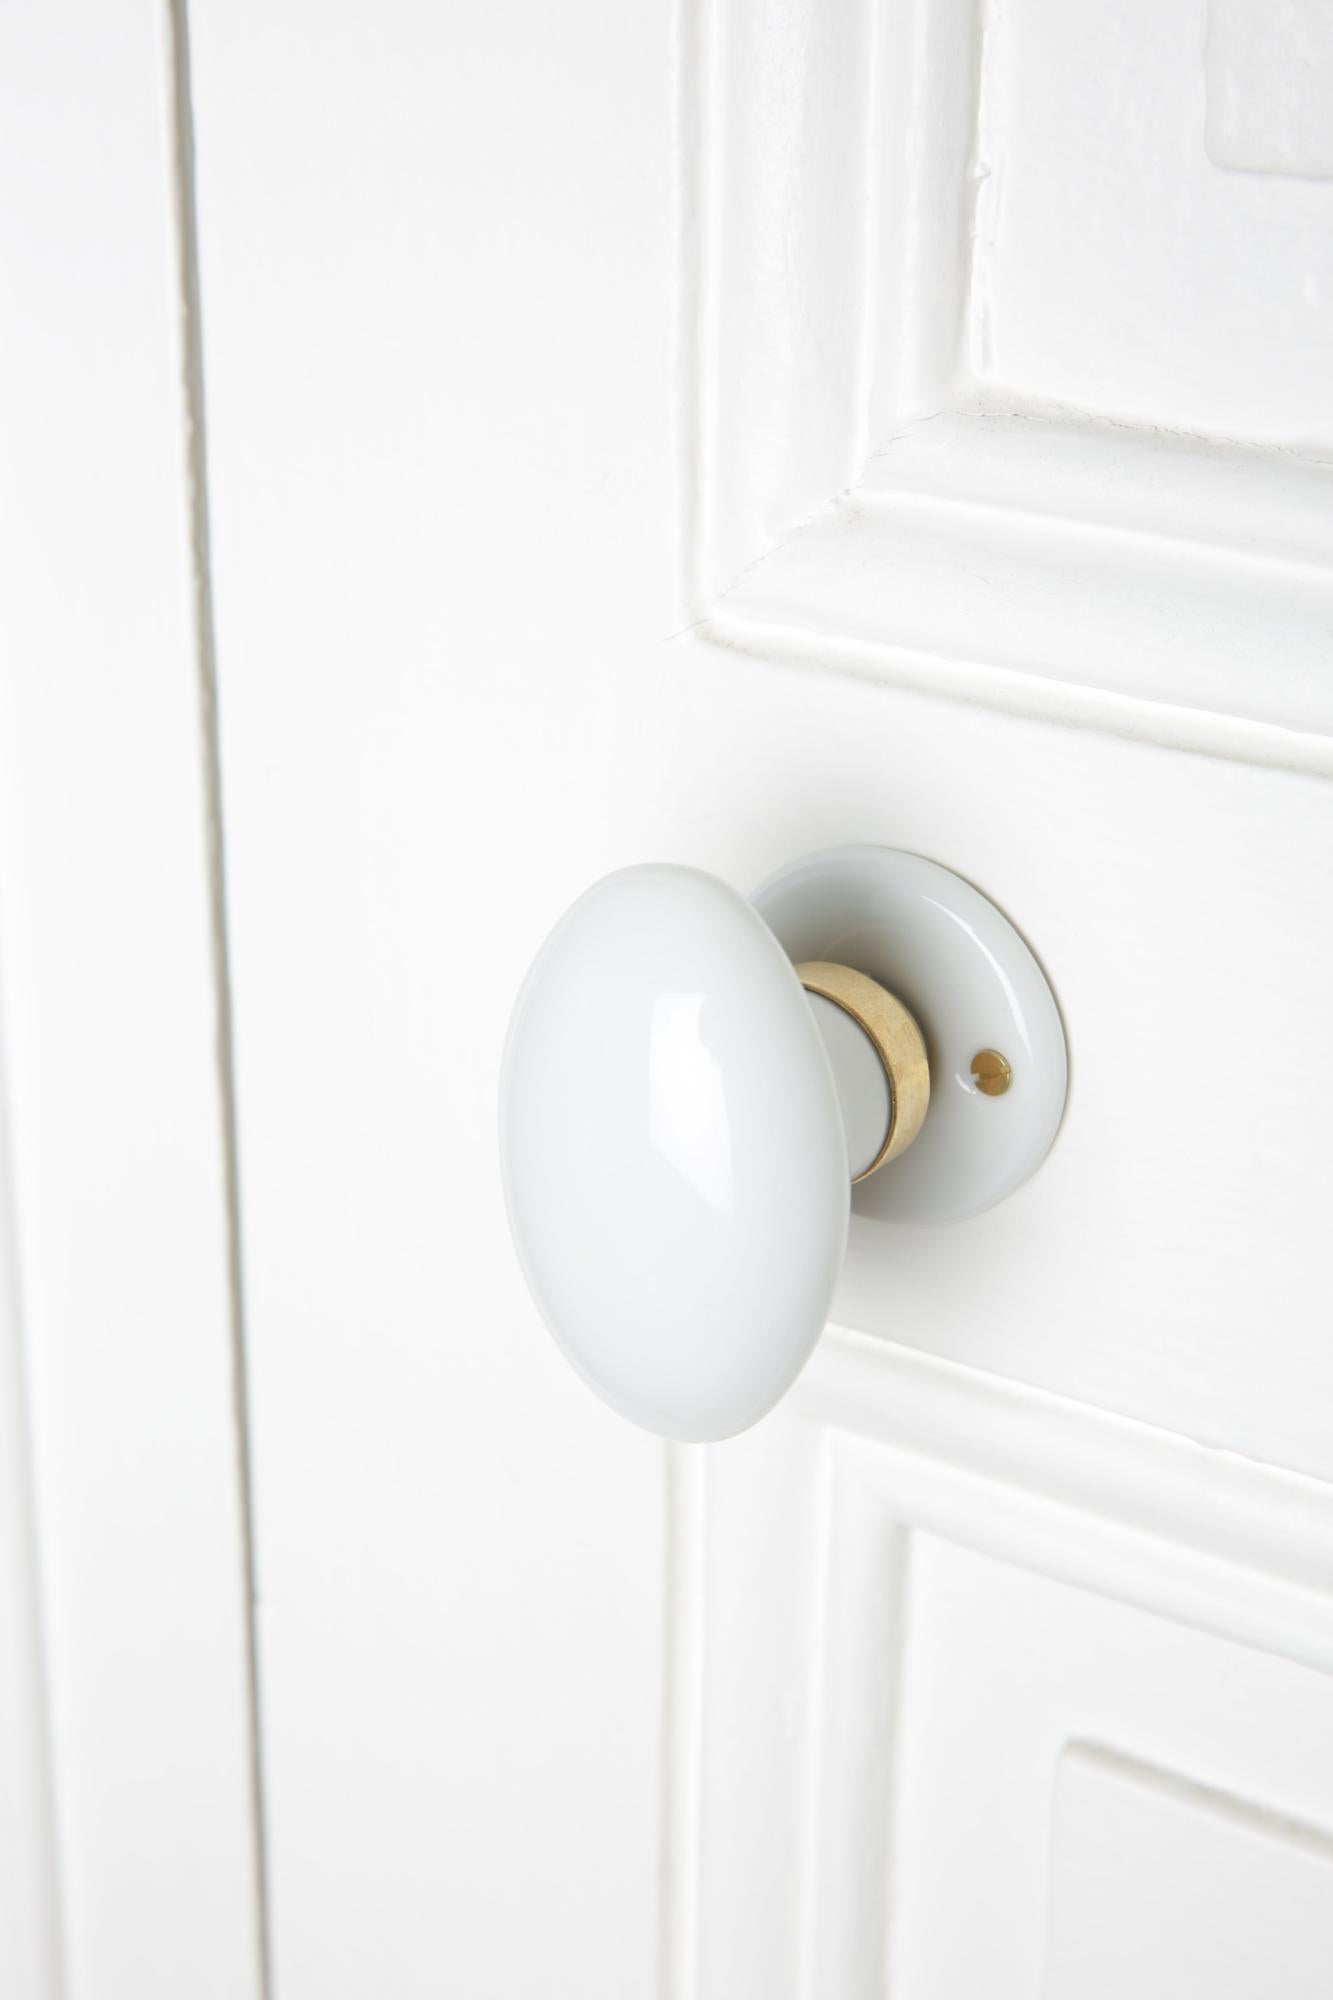 Poignée de porte : boutons de porte, poignées - Côté Maison